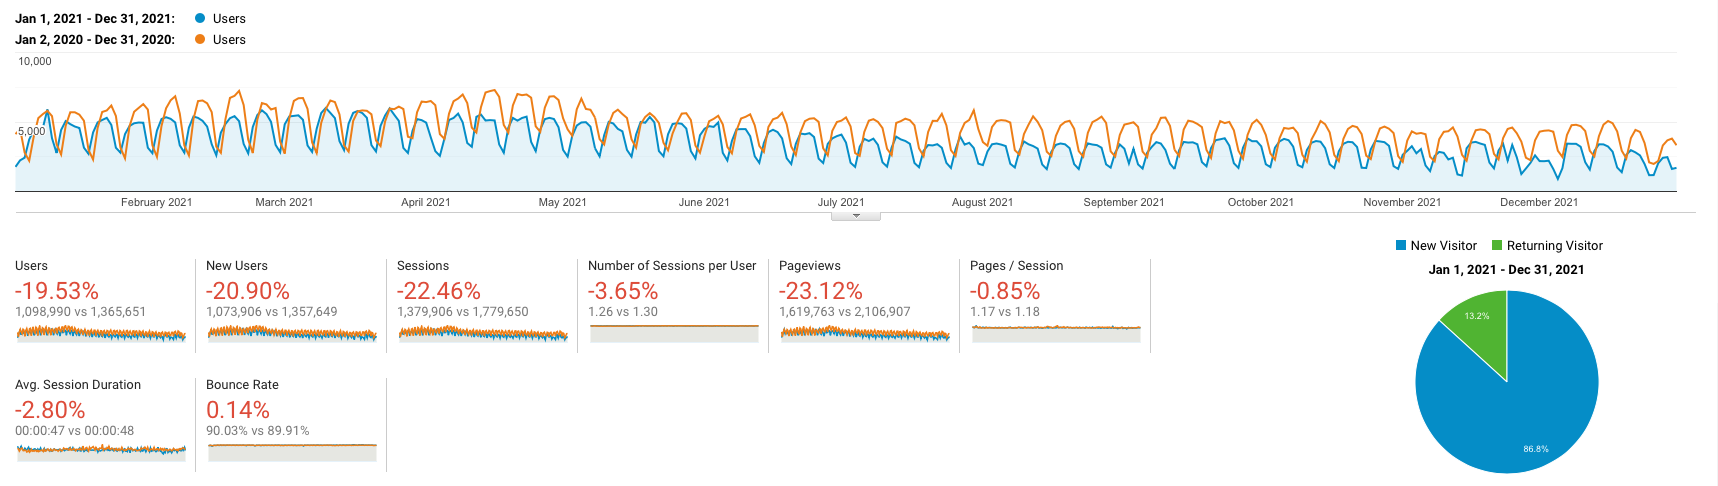 Google analytics screenshot of zellwk.com traffic